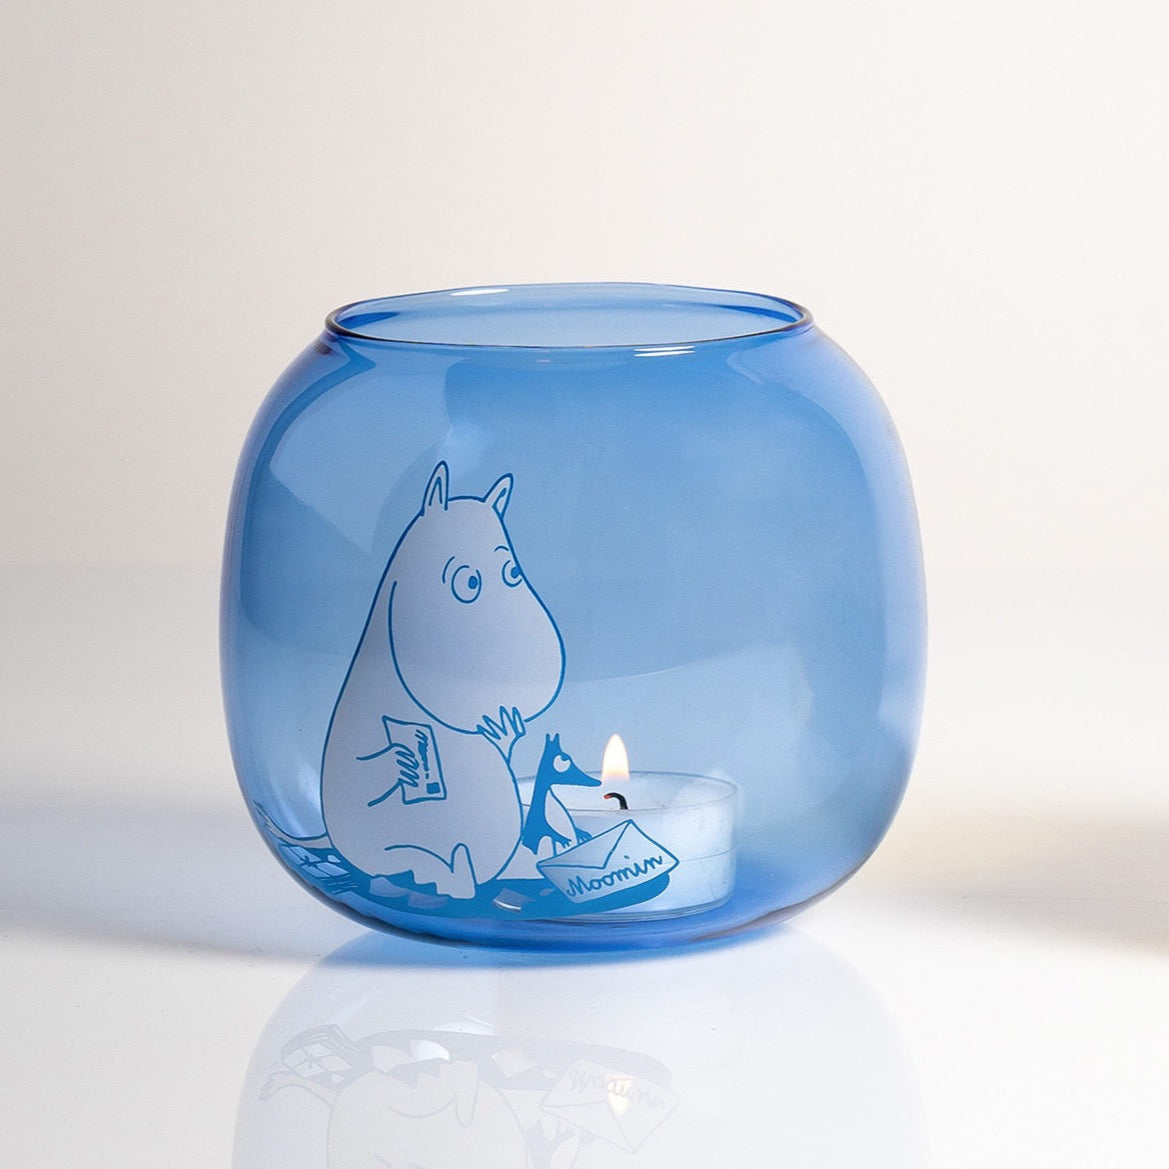 MOOMIN - Tealight Candle Holder, Moomin, Blue.